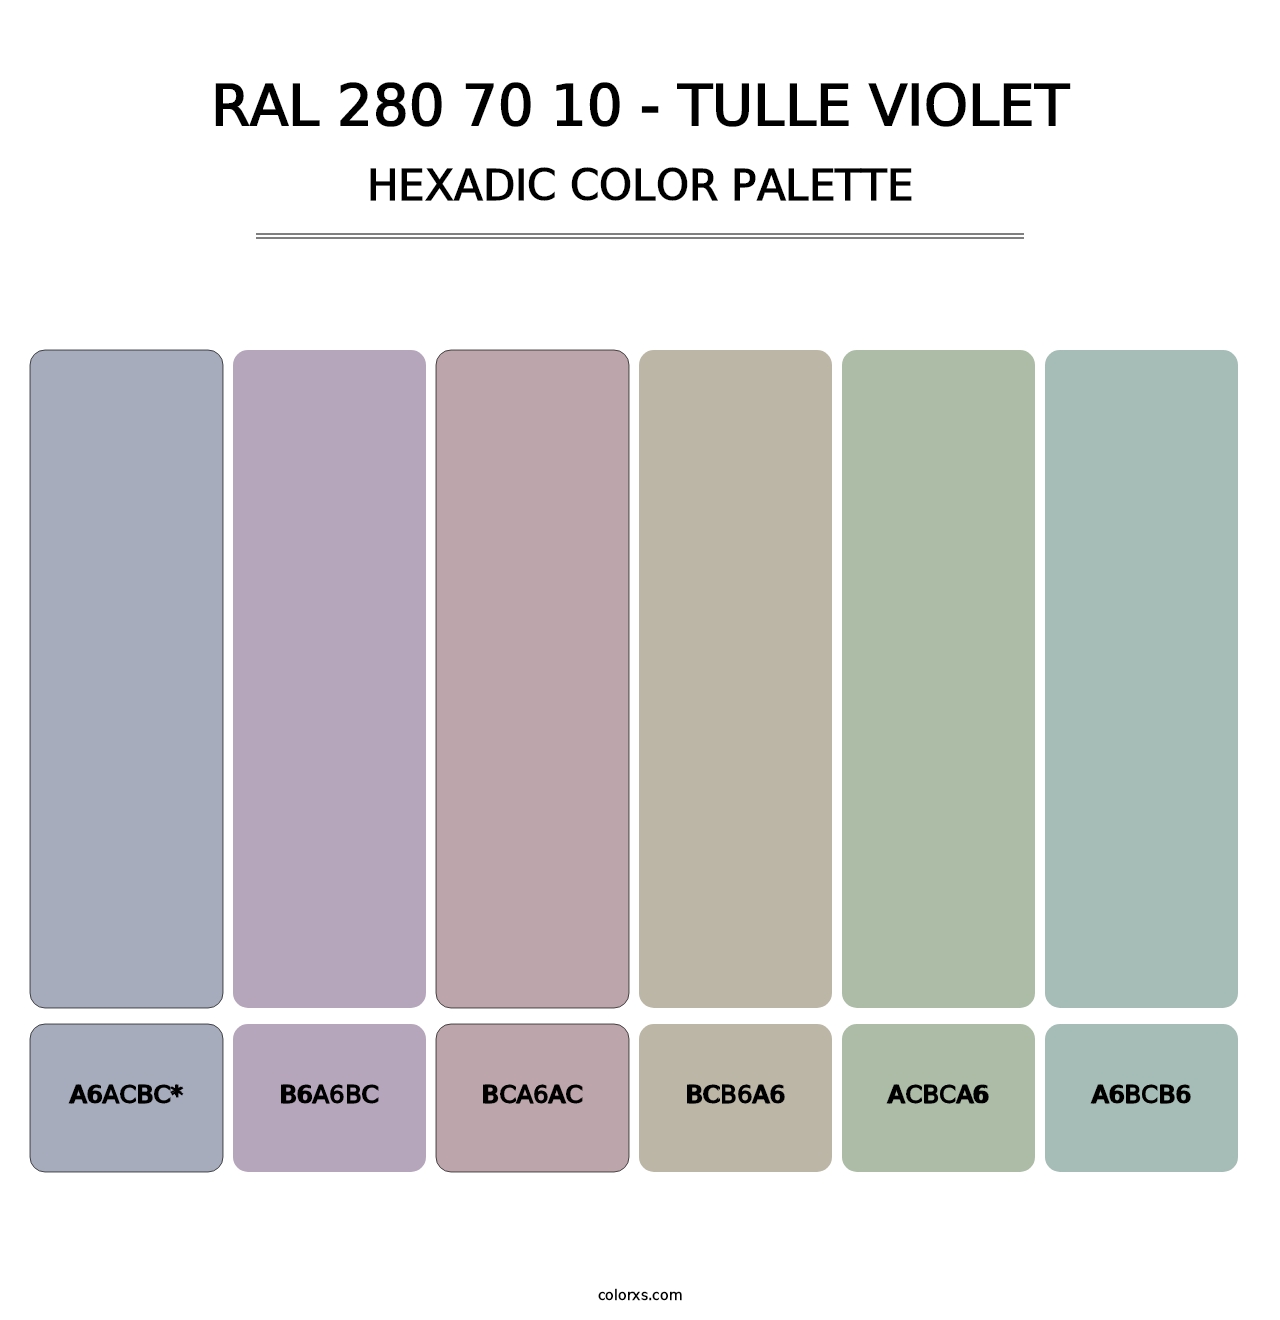 RAL 280 70 10 - Tulle Violet - Hexadic Color Palette